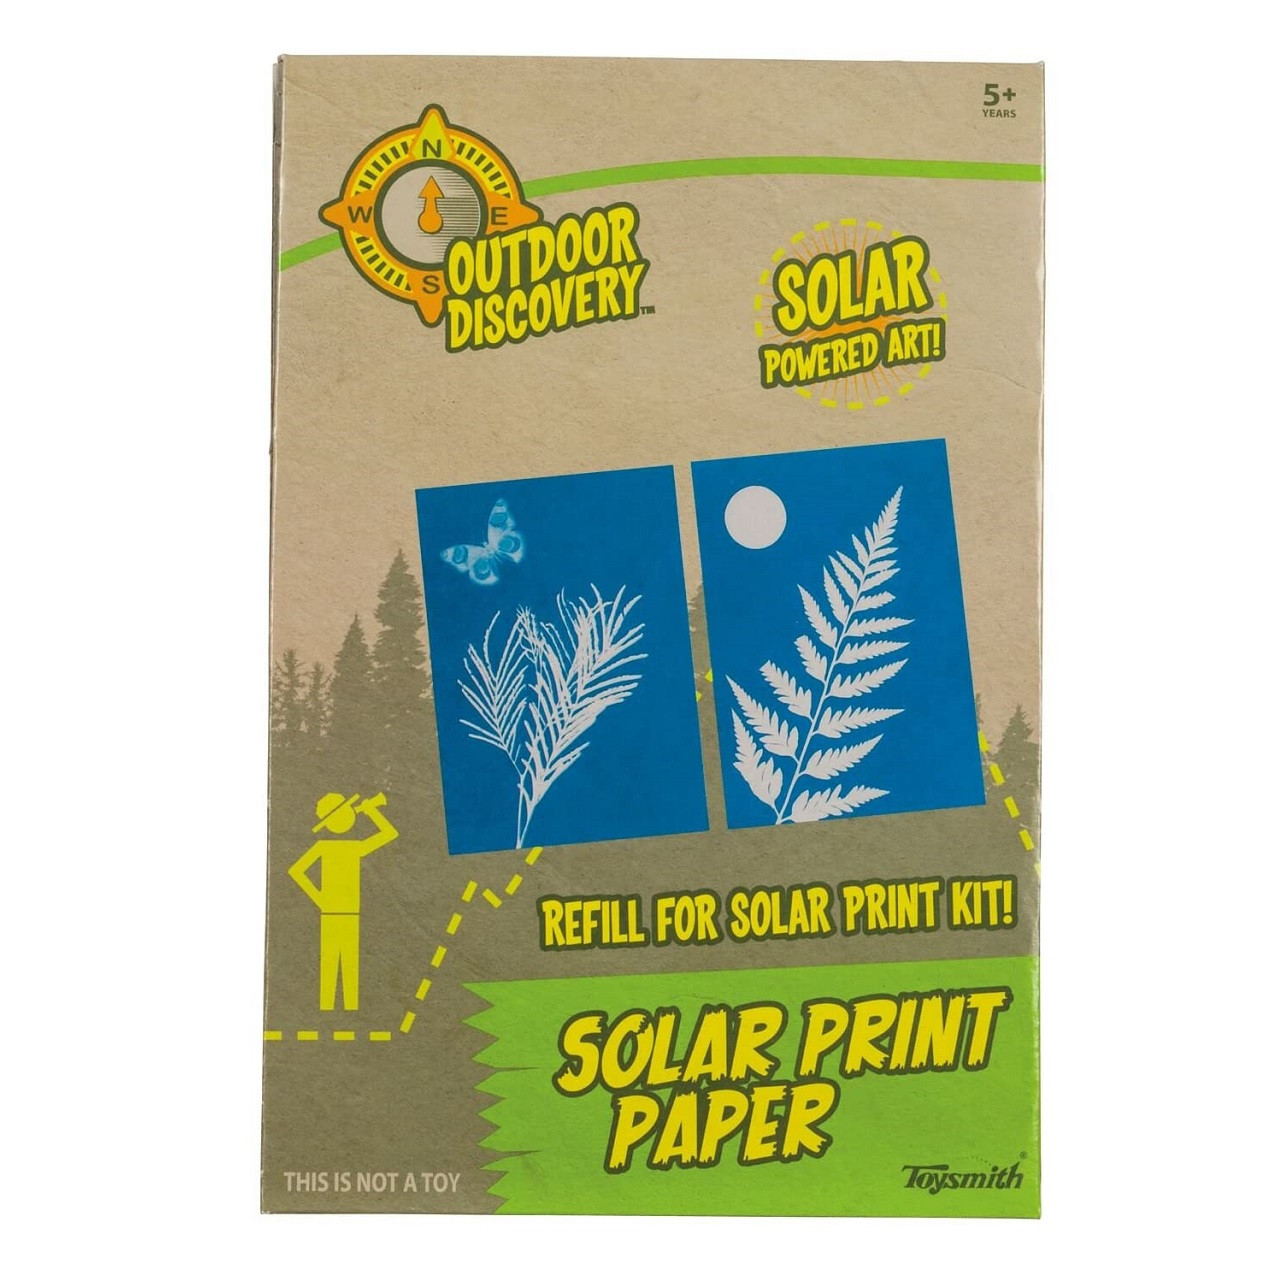 Solar Print Paper - Detroit Institute of Arts Museum Shop